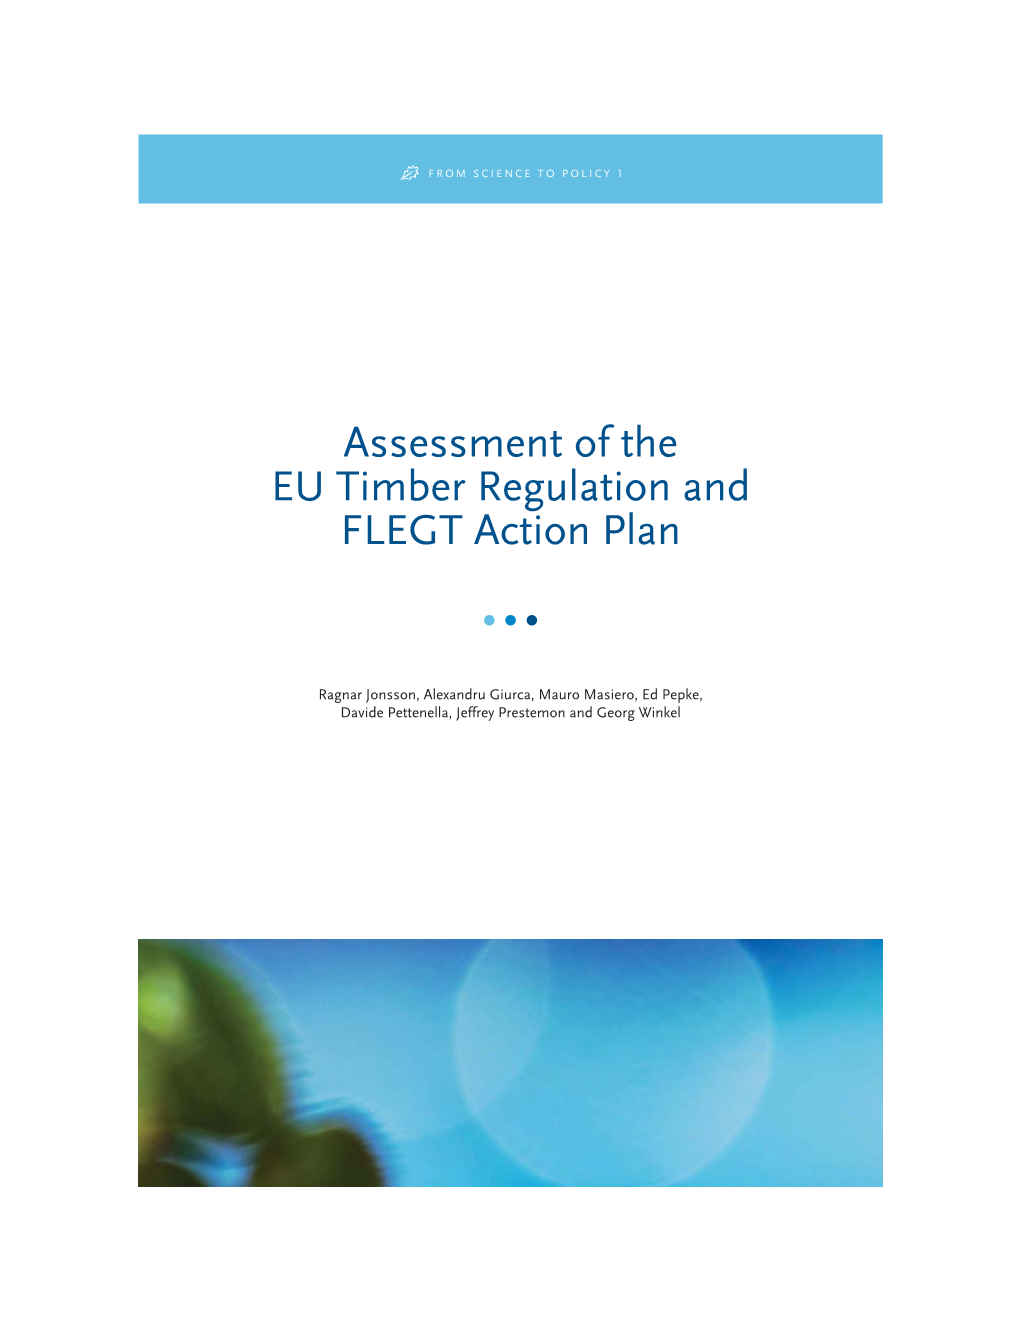 Assessment of the EU Timber Regulation and FLEGT Action Plan